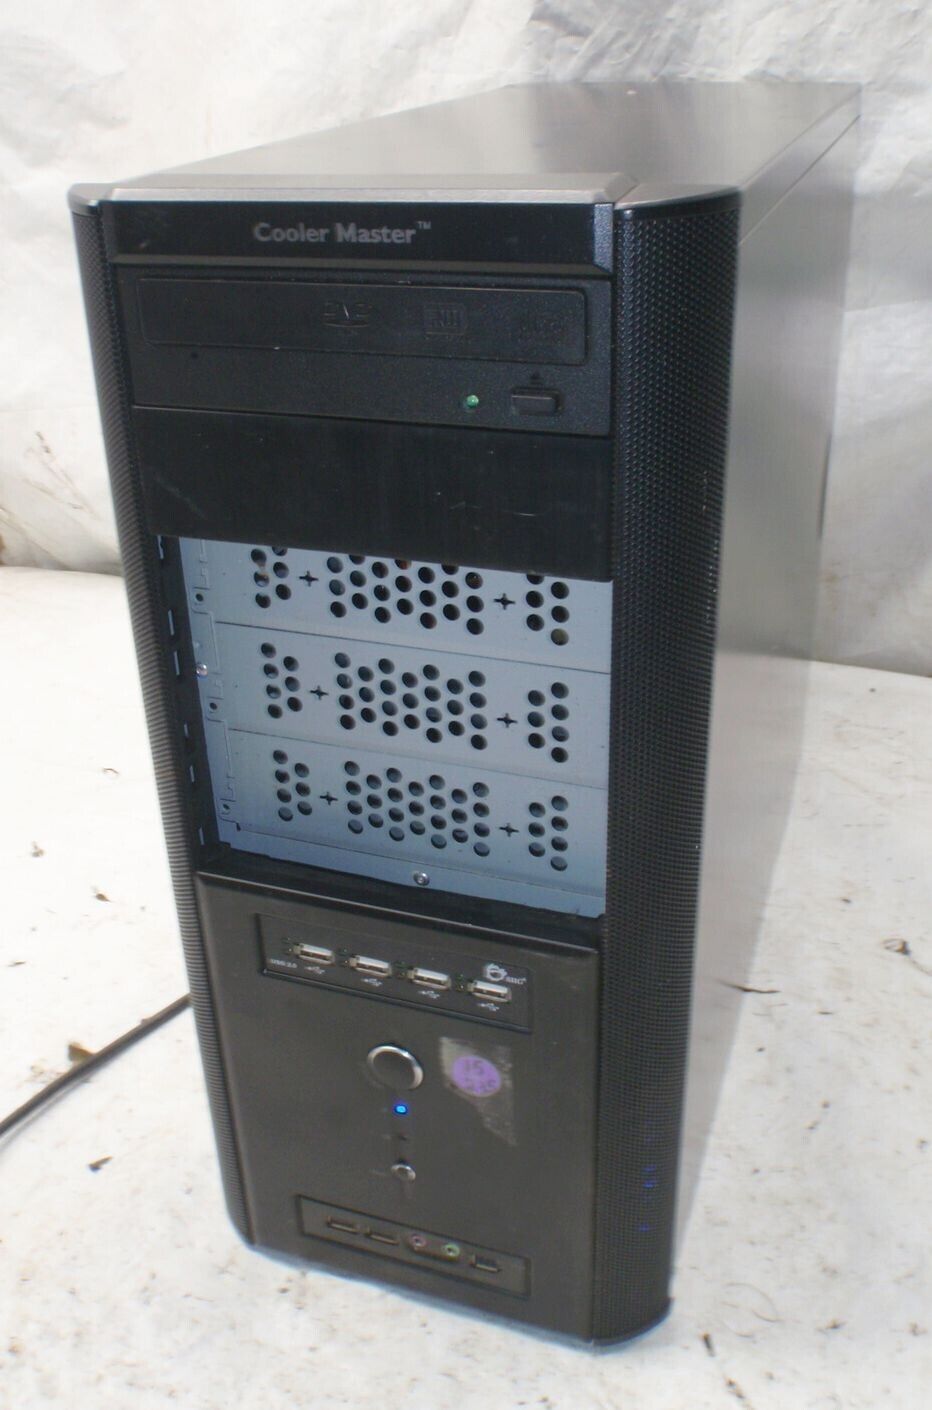 Cooler Master Desktop Computer - Unknown Specs